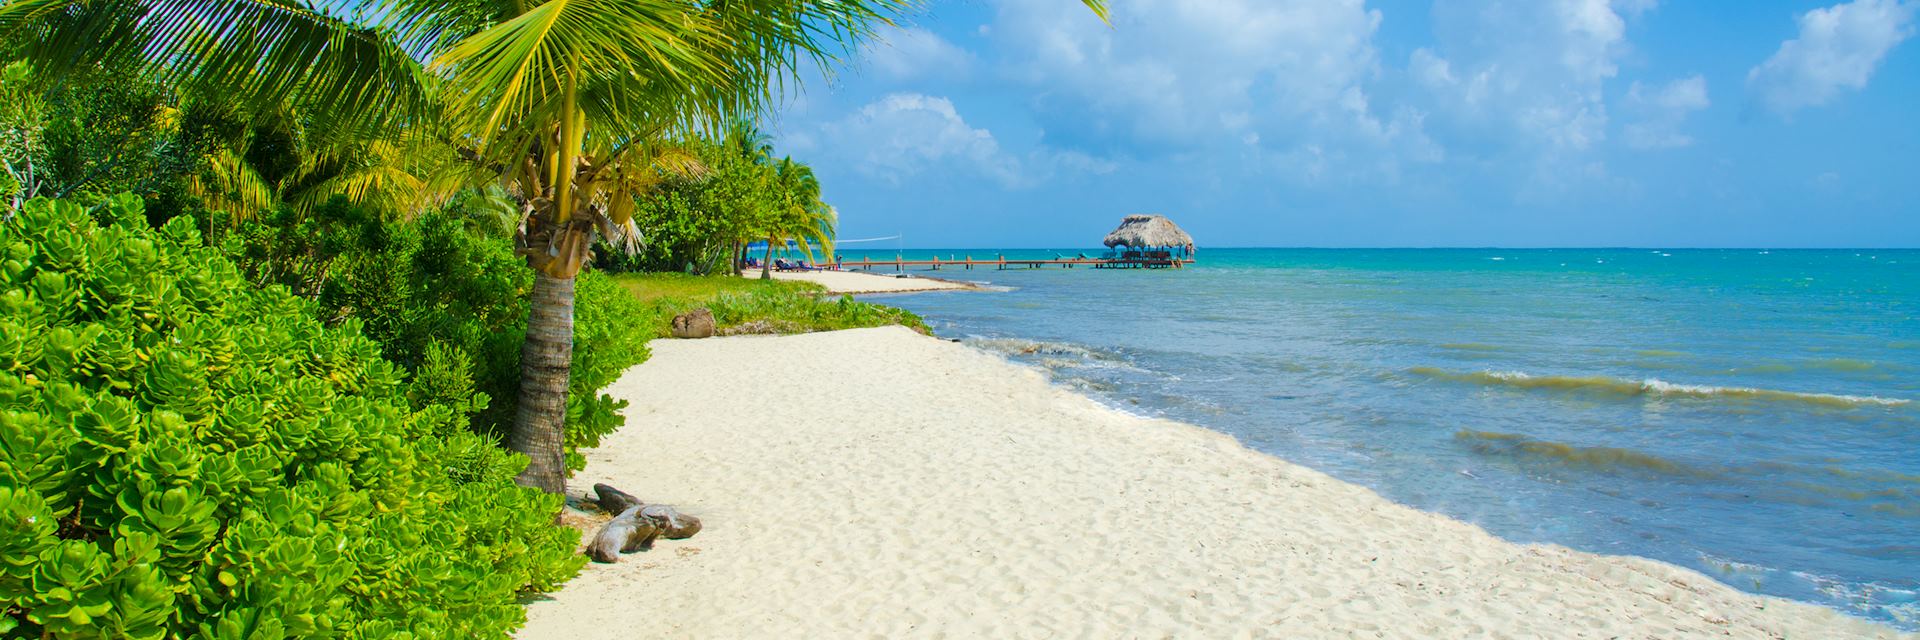 Beach in Placencia, Belize